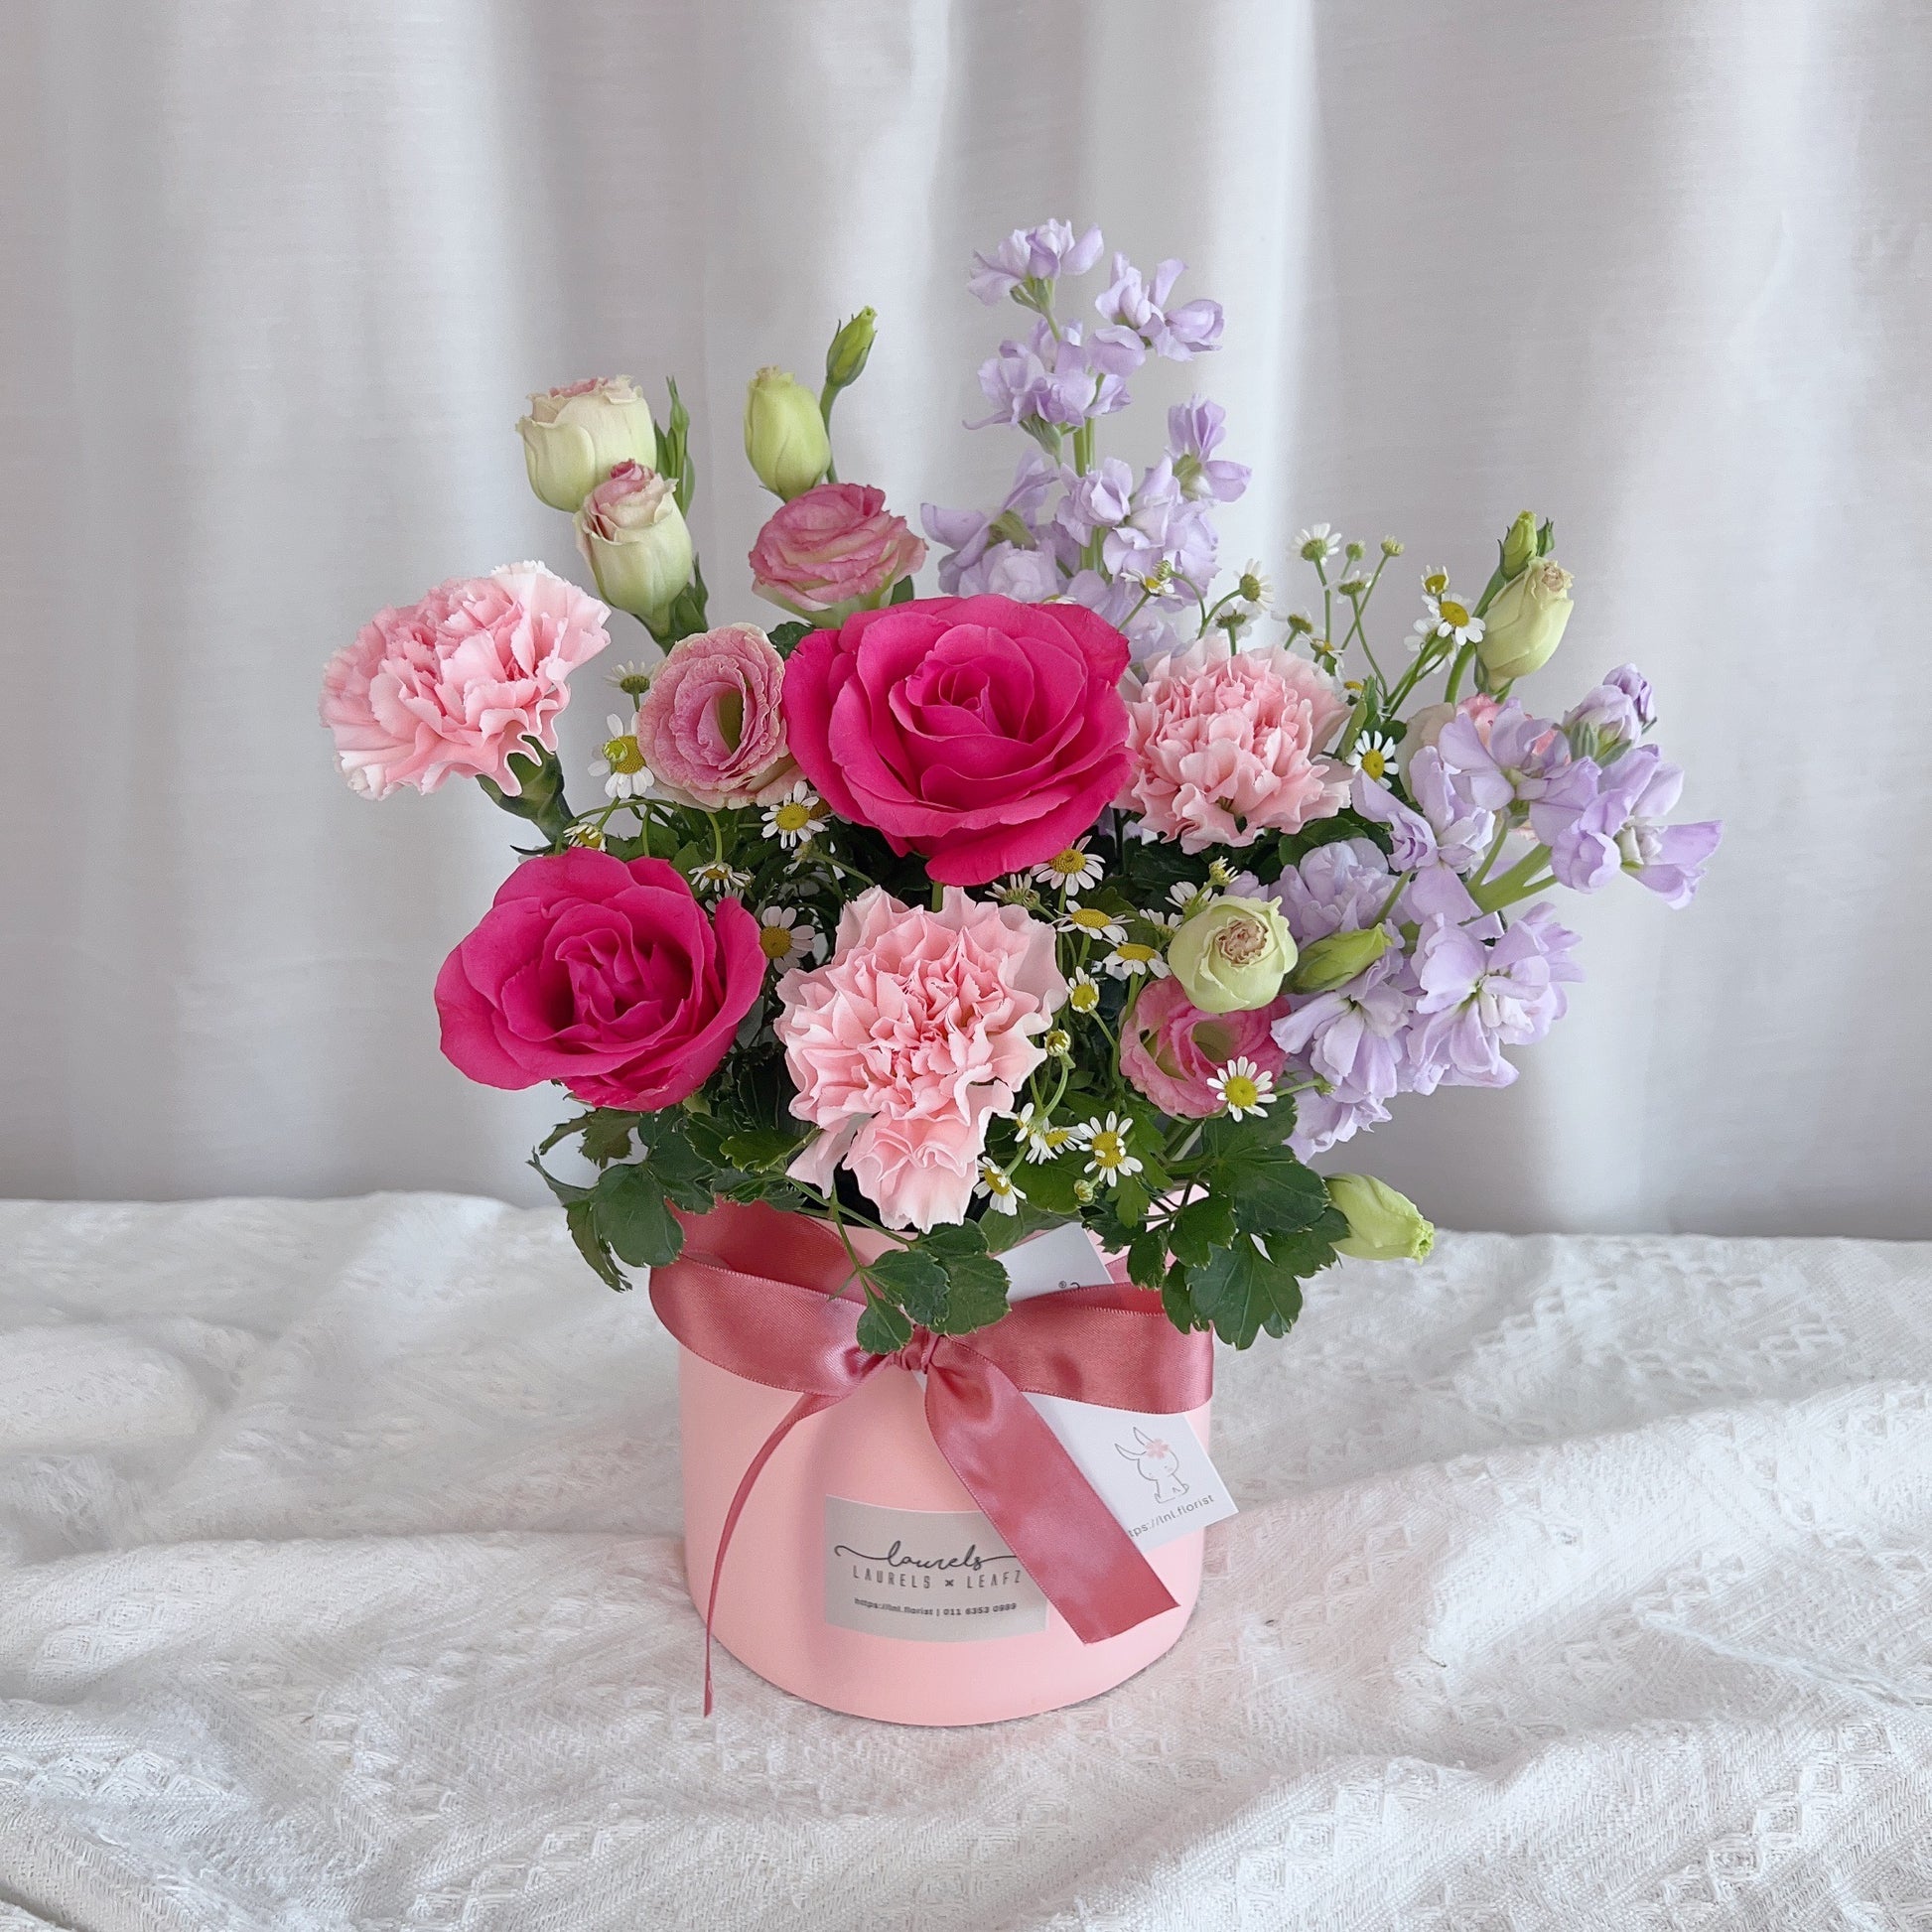 Callie Flower Box | Remarkable Flower Arrangement For Mother's Day 